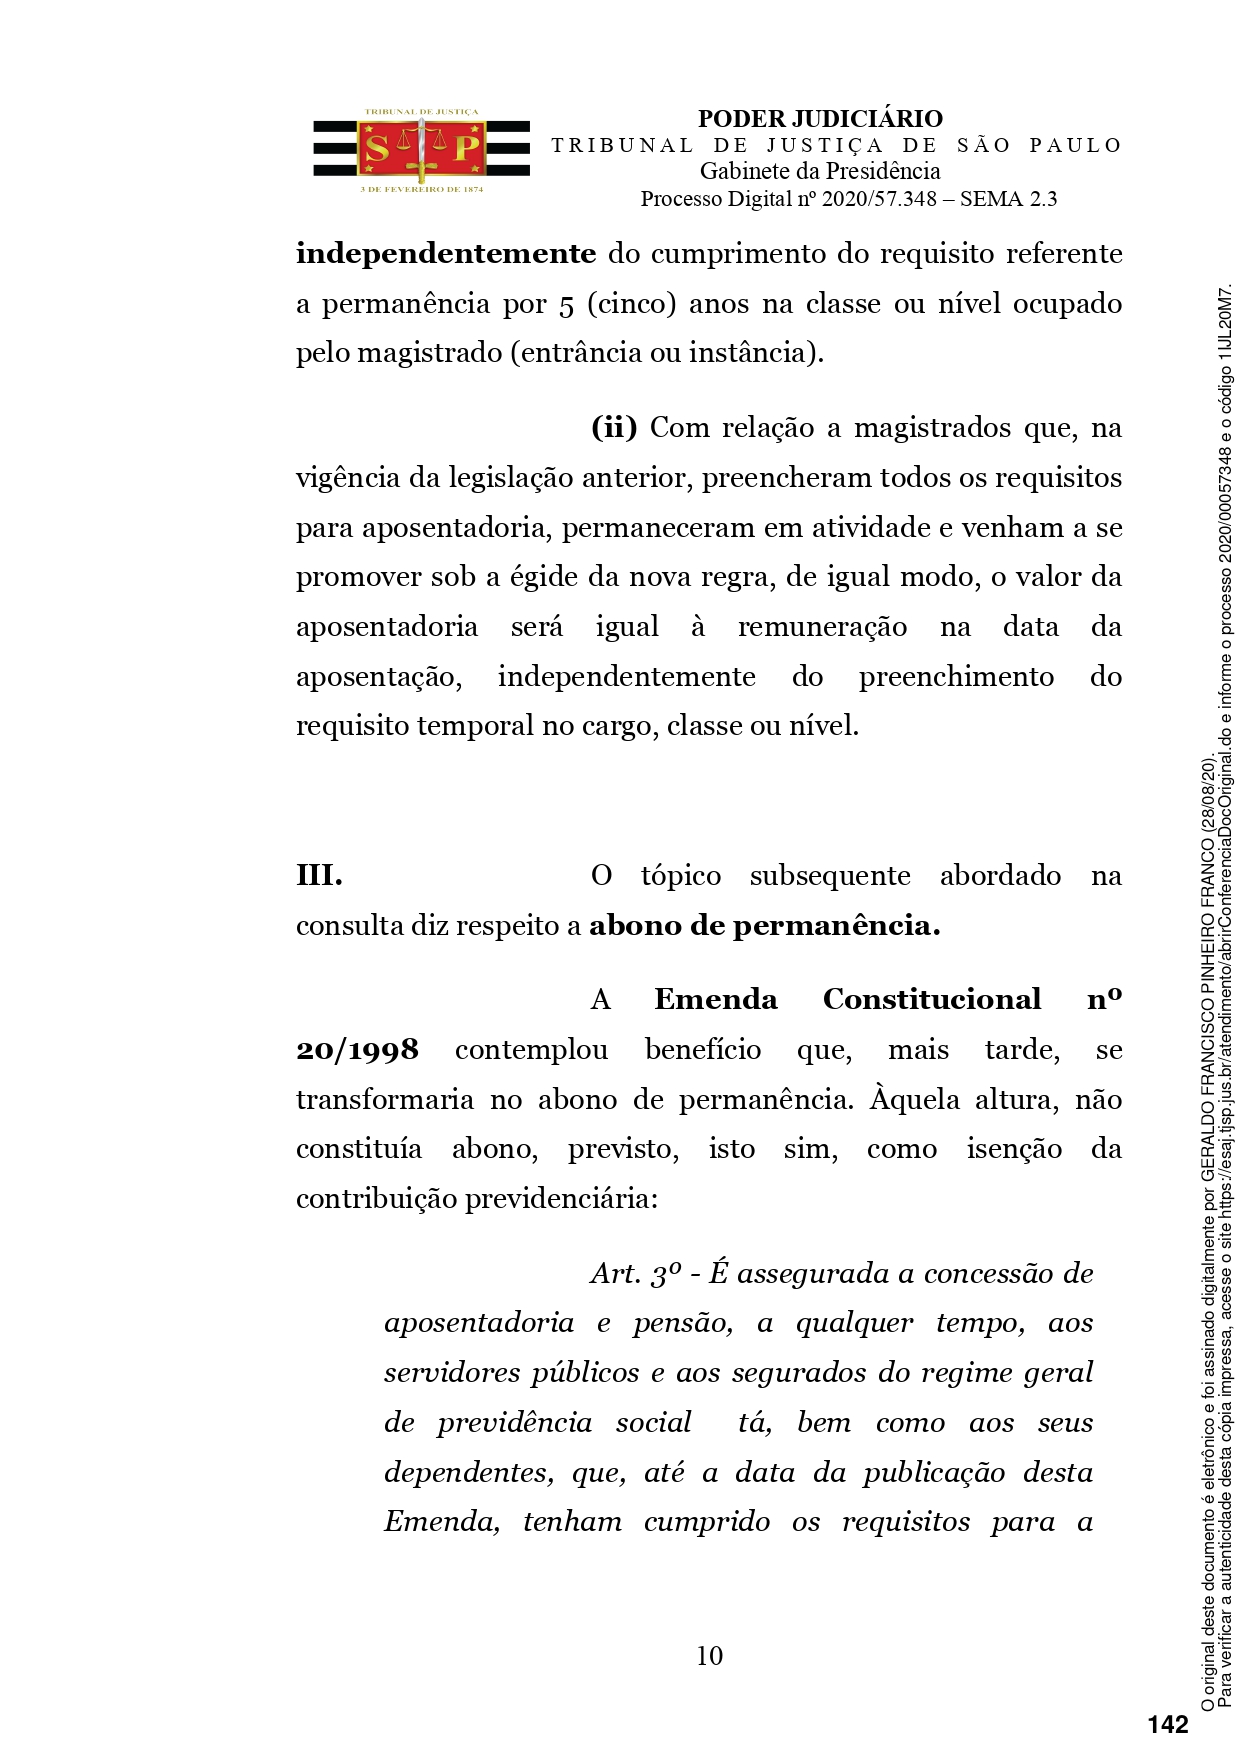 reforma-previdencia-tj-sp_page-0010.jpg